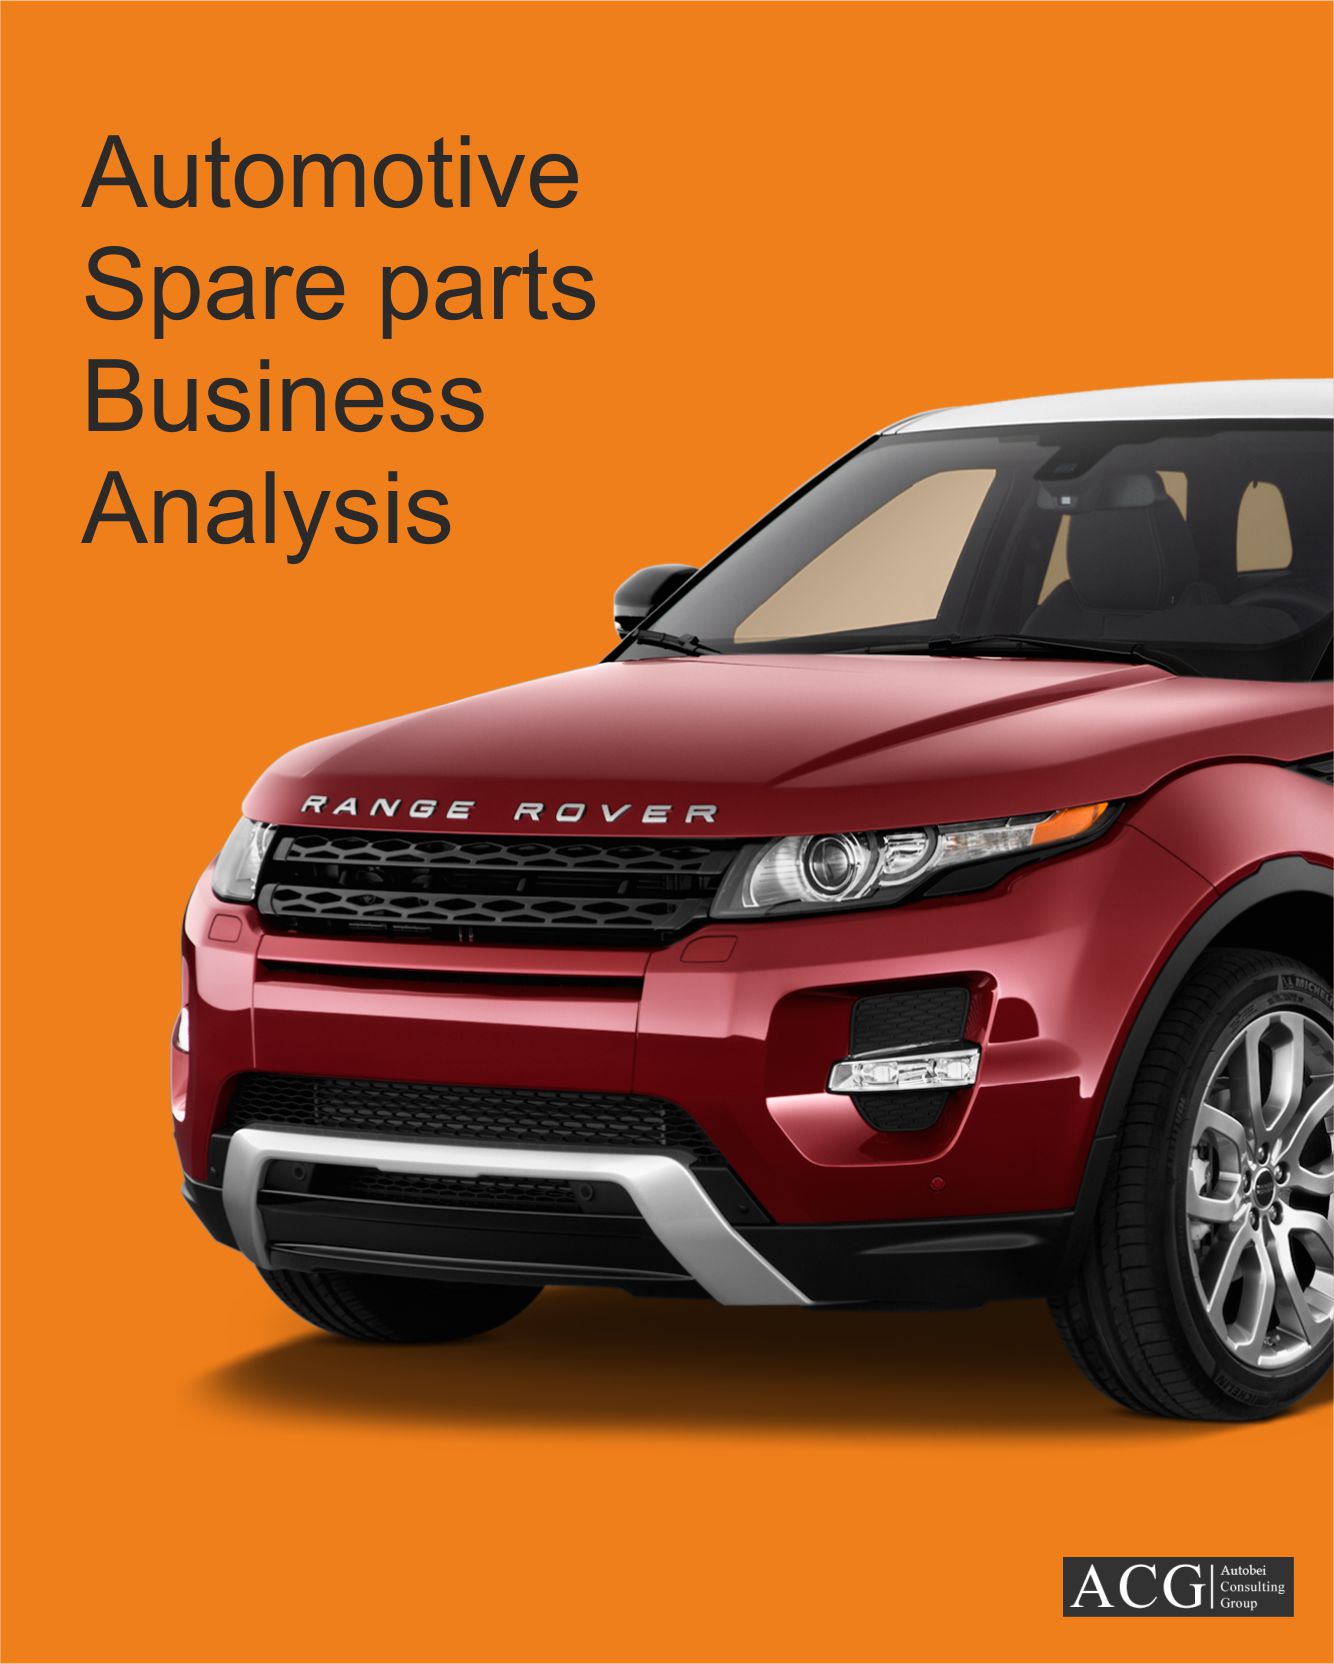 Automotive Spare parts Analysis